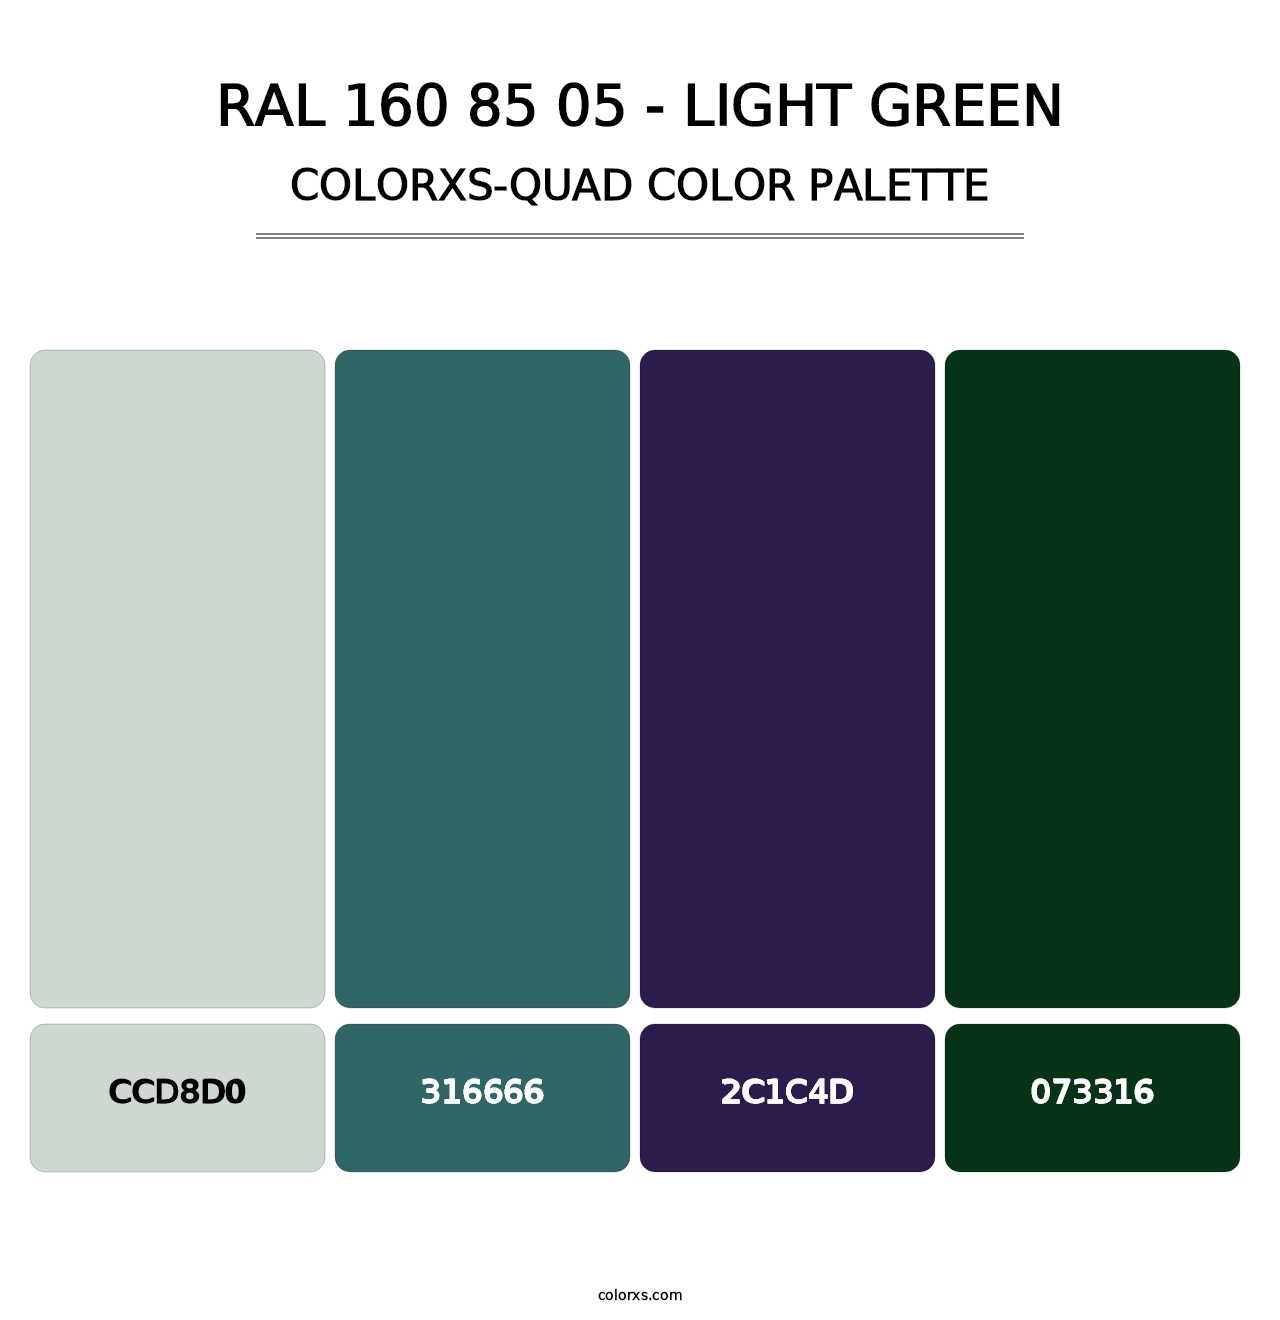 RAL 160 85 05 - Light Green - Colorxs Quad Palette